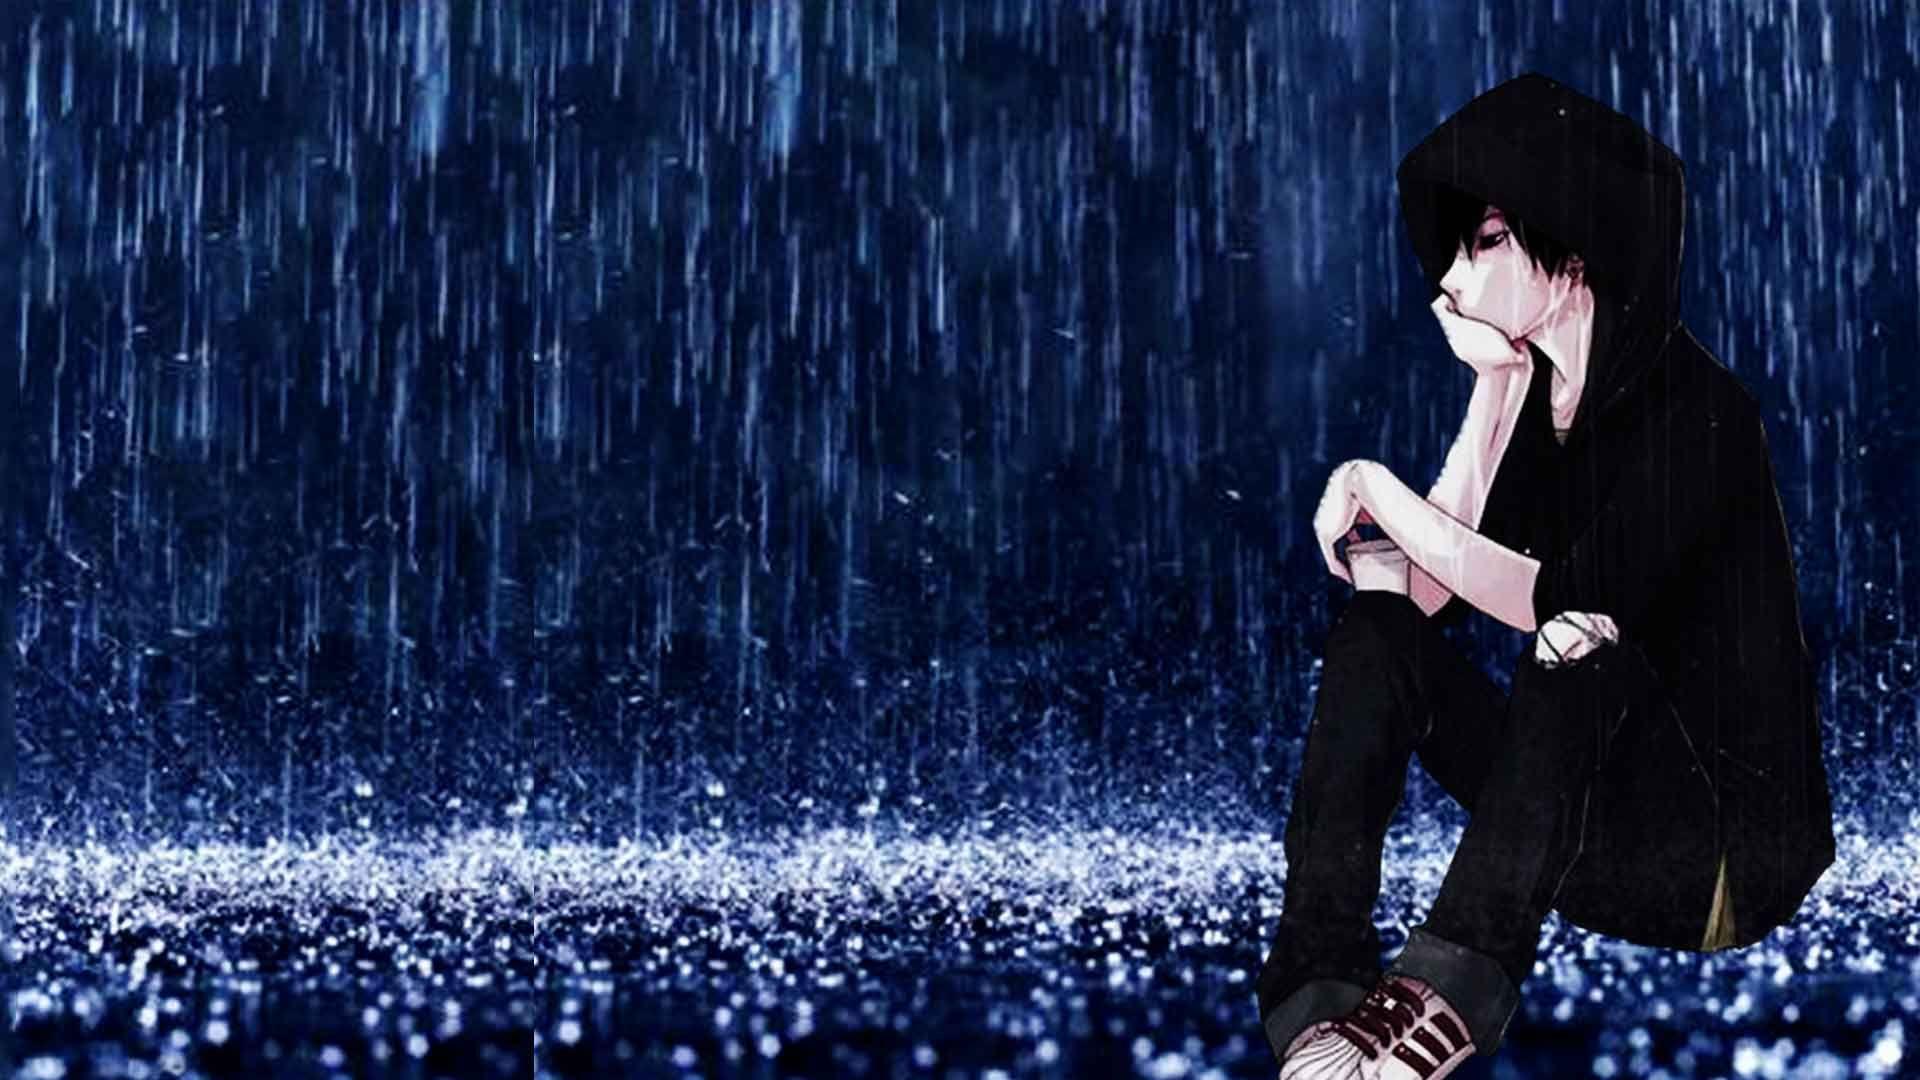 Sad Anime Boy Image. Sad Cartoon Boy Alone Pic. Sadever